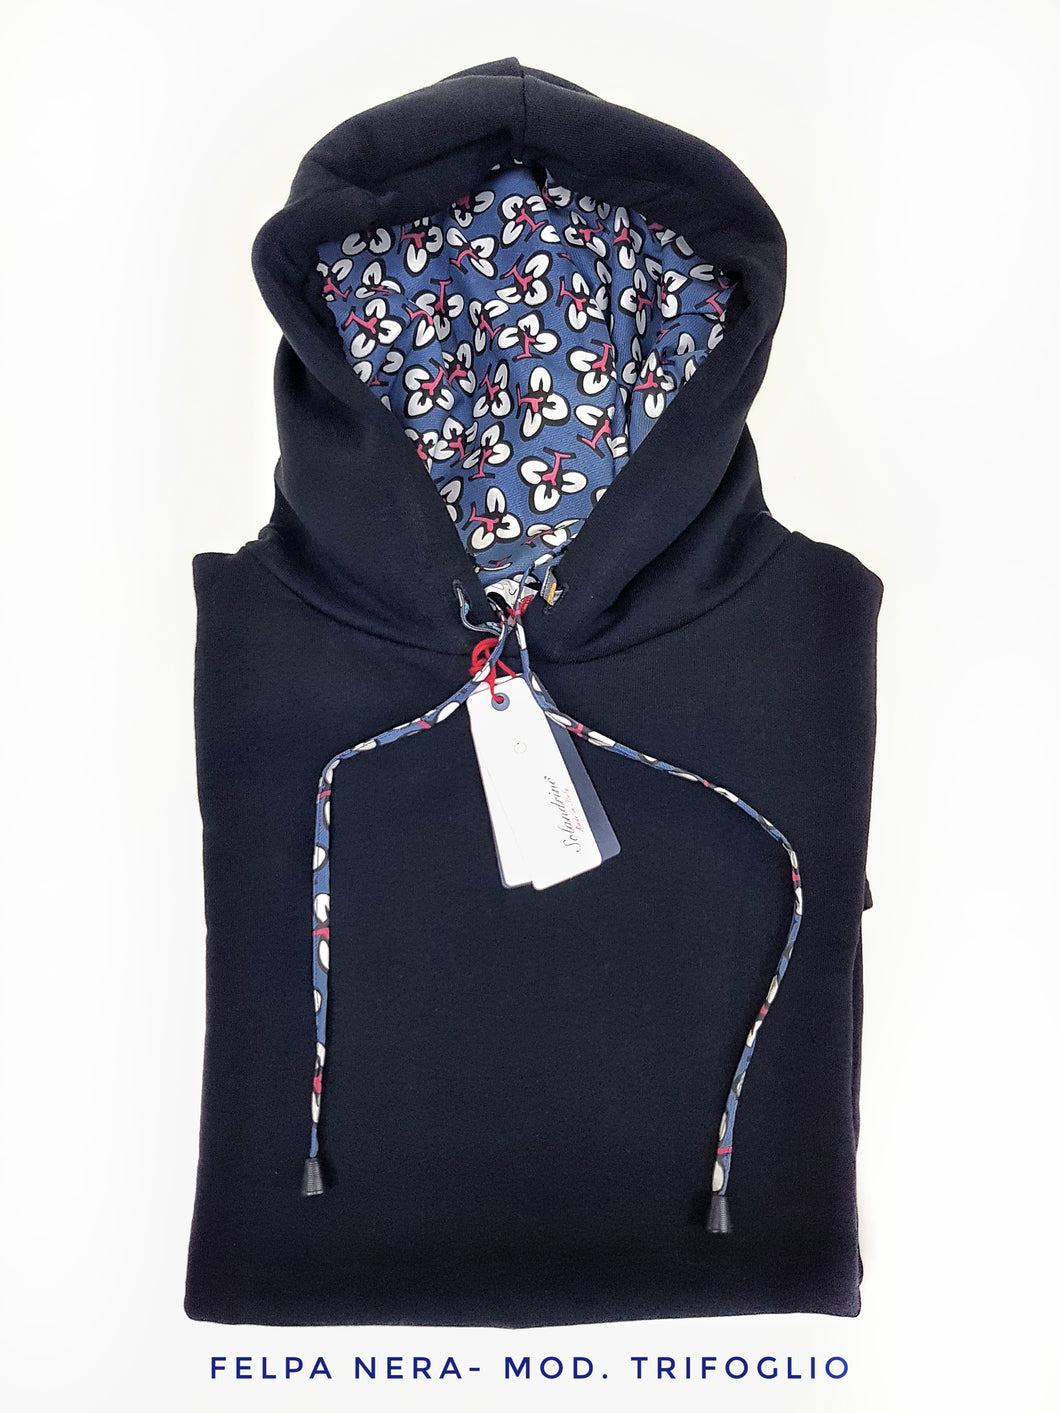 Felpa Nera con Cappuccio design trifoglio  made in Italy Fantasia 100% cotone  Unisex Sweatshirt black Hoodie